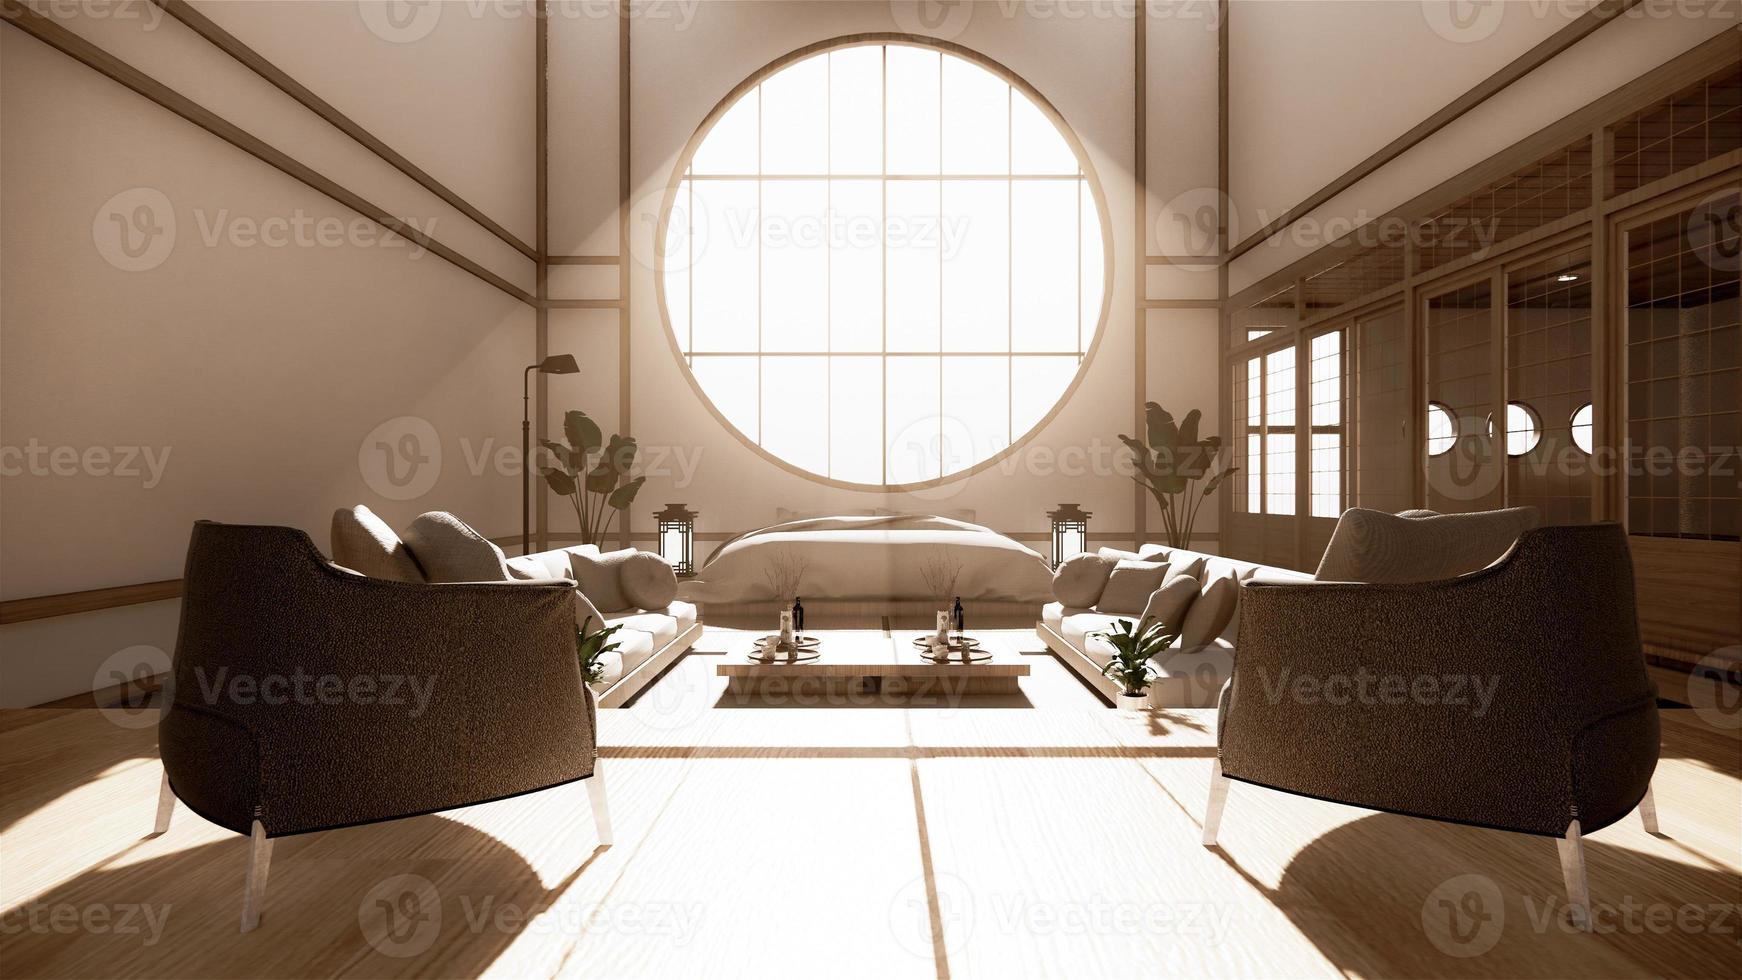 ideias para salas multifuncionais, design de interiores de salas japonesas. Renderização 3D foto